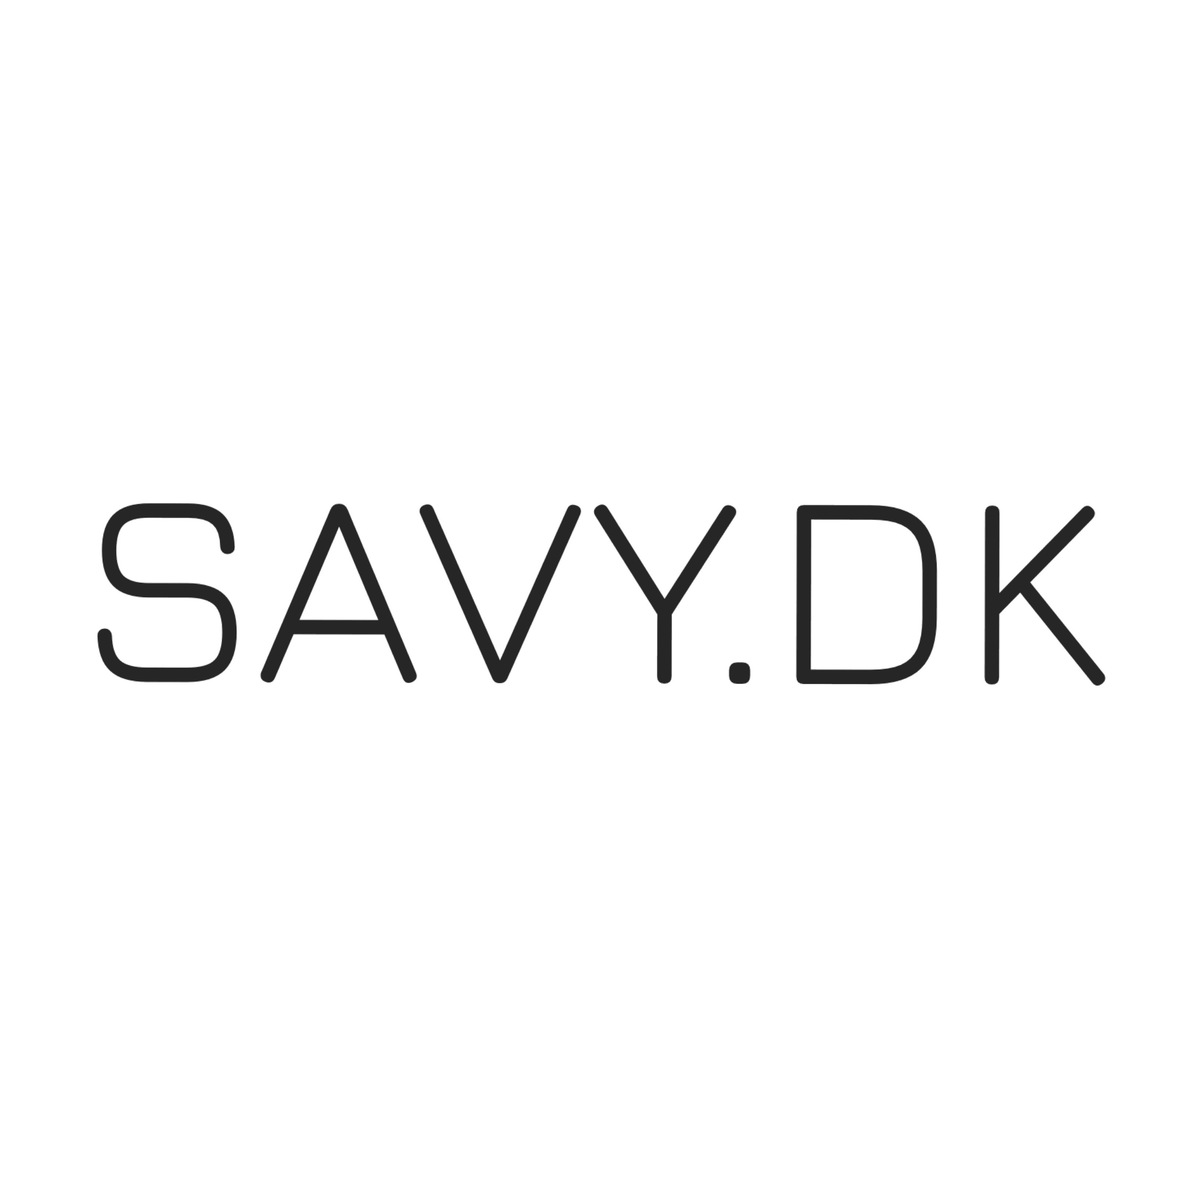 SAVY smykker Savy.dk